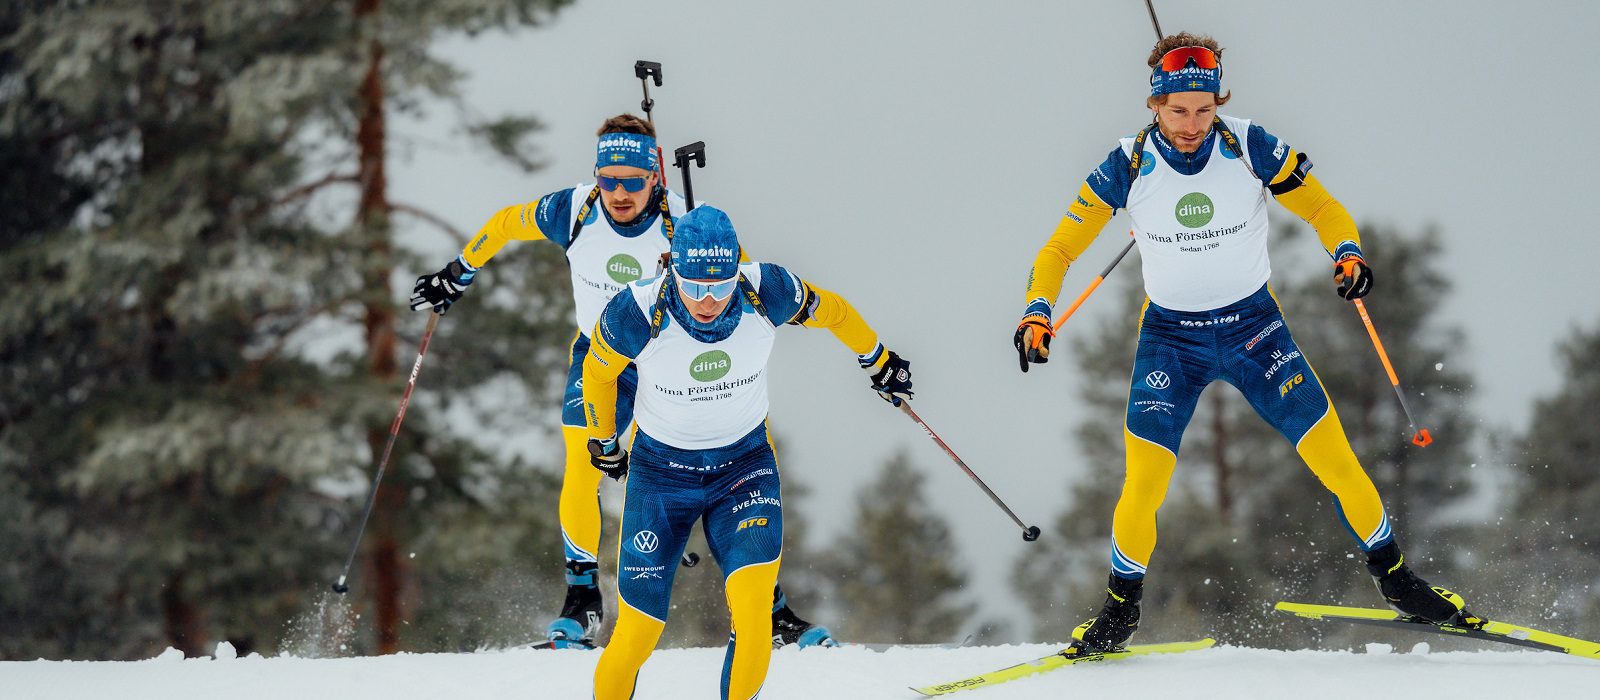 Dina Forsakringar - support for Swedish Biathlon - skiers image 2024